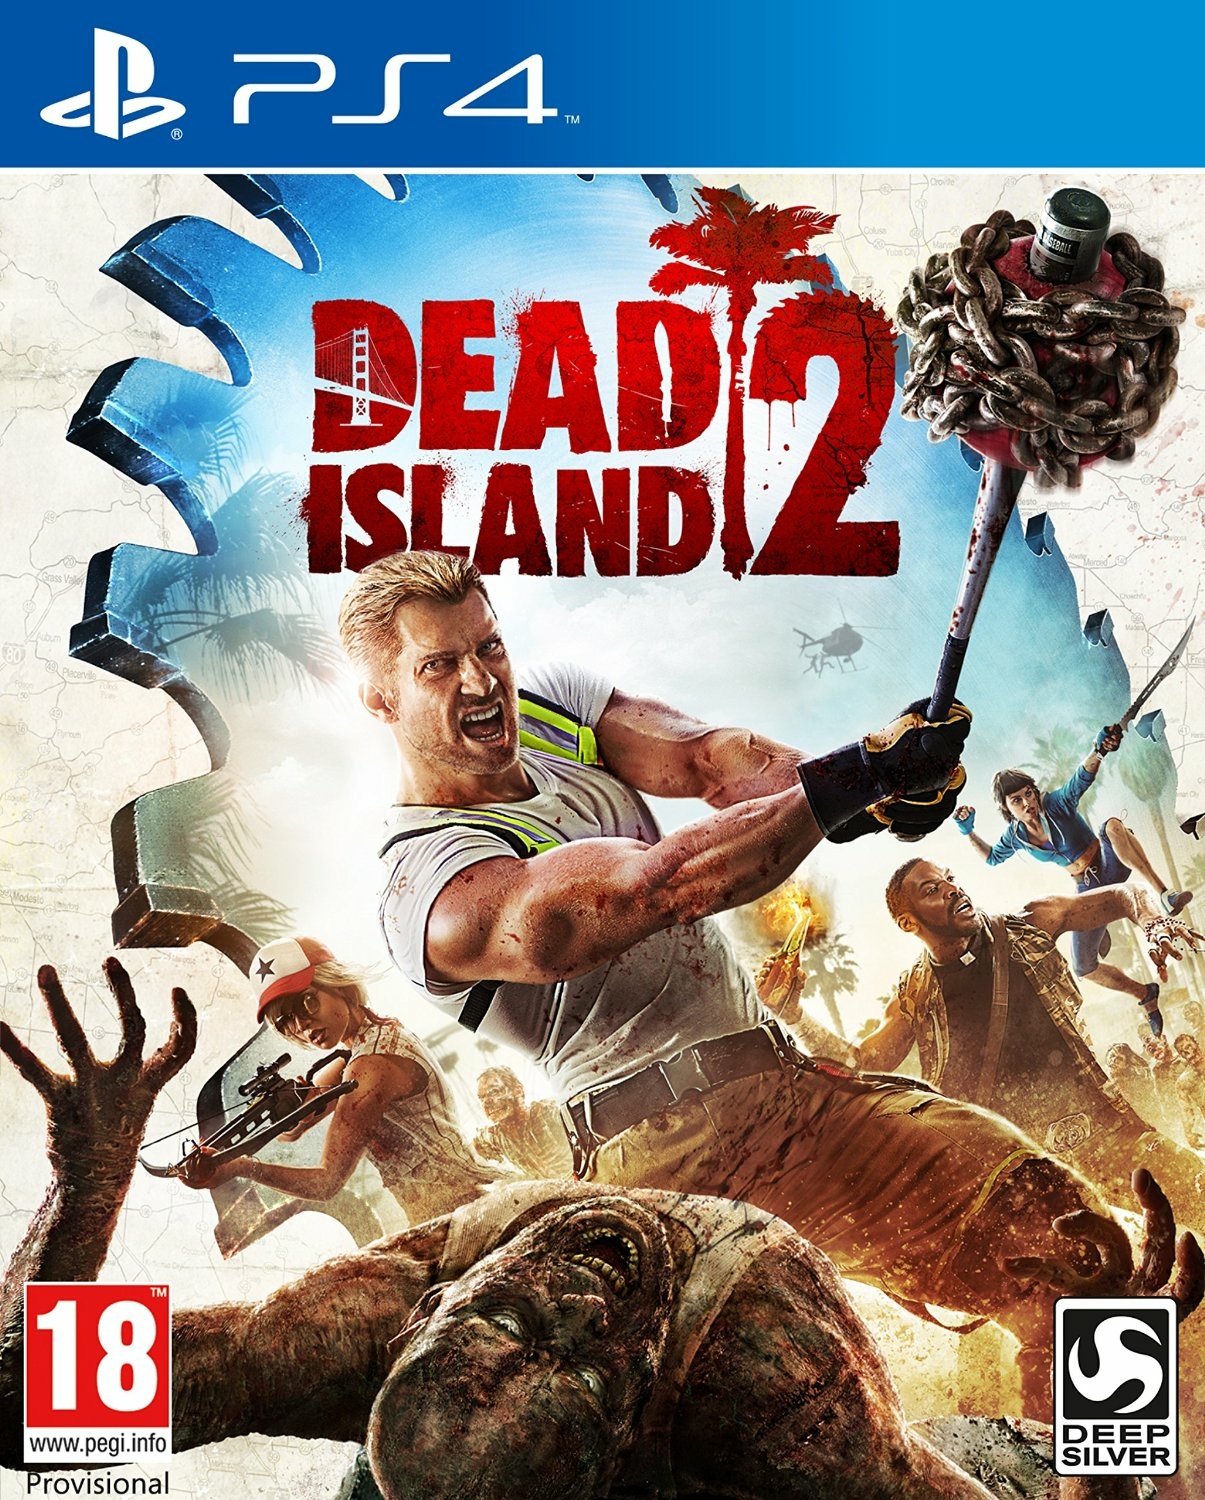 dead island 2 release date in india